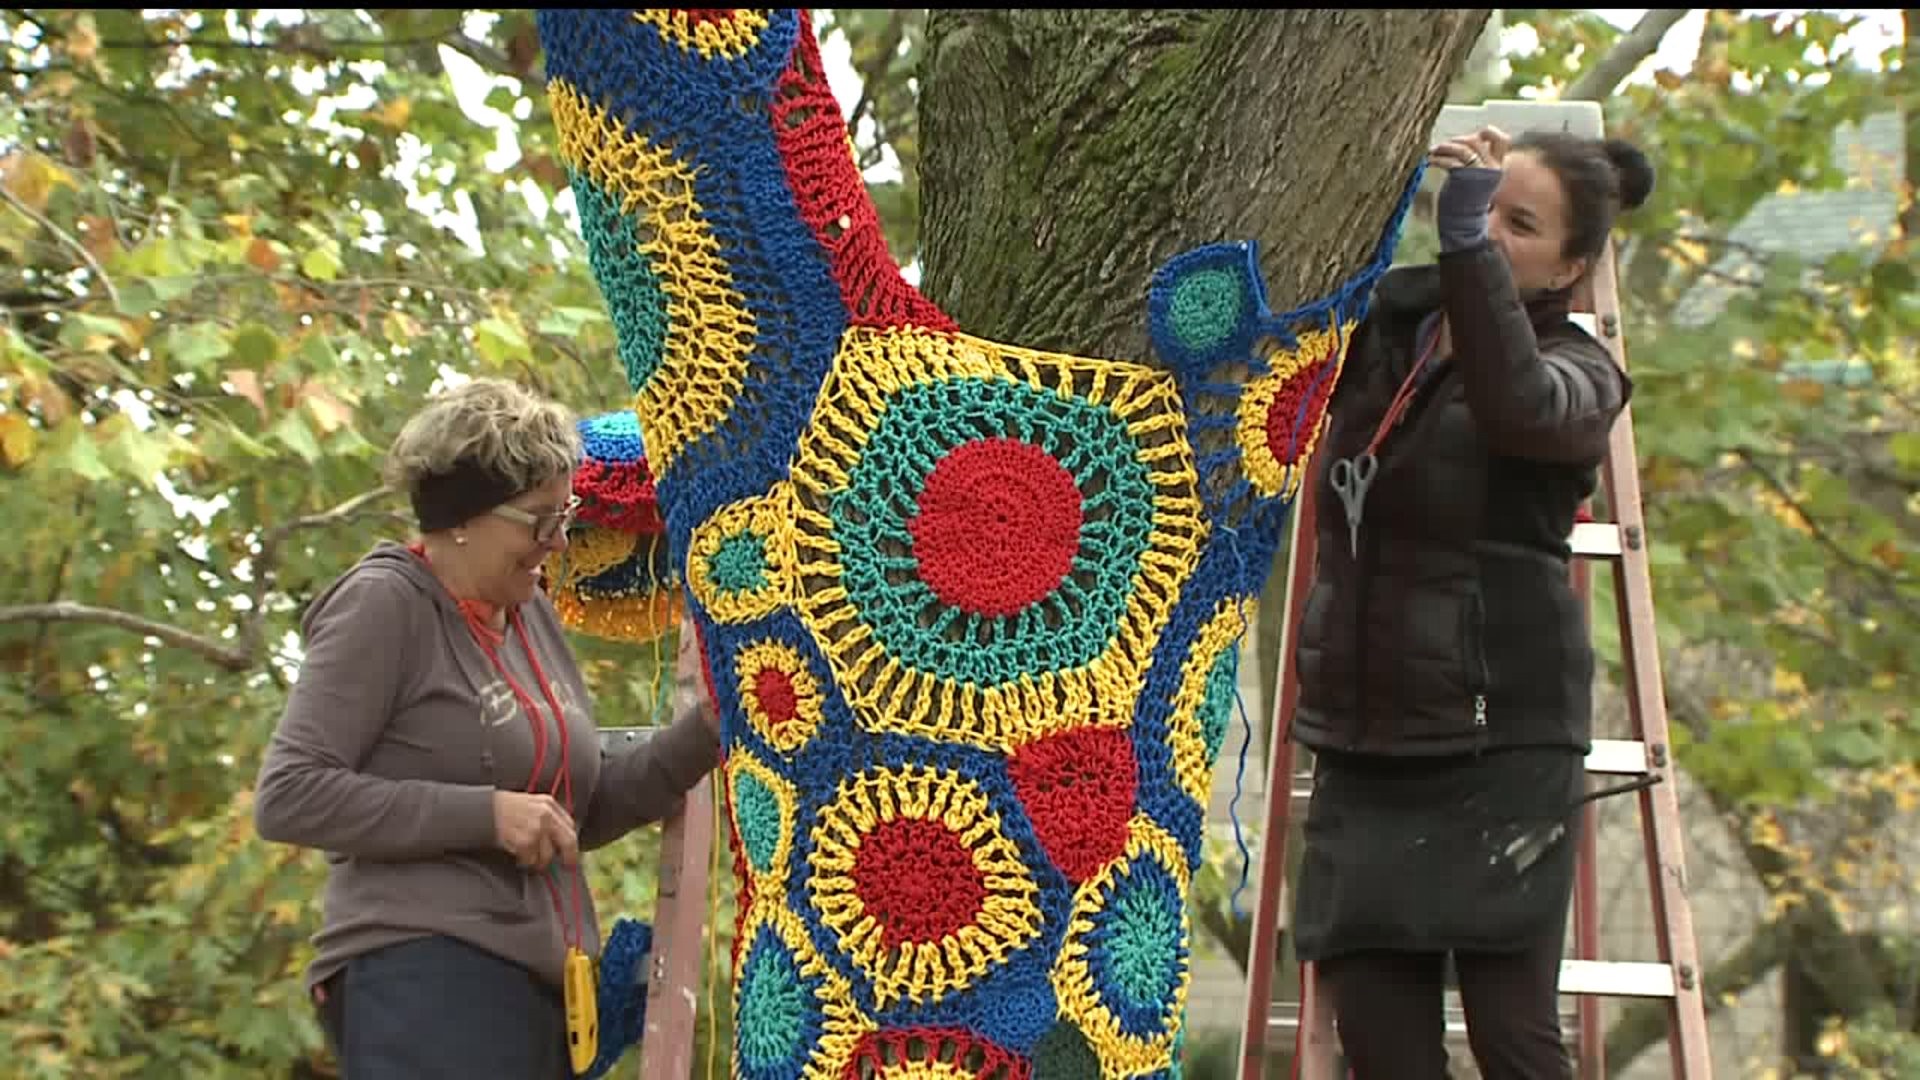 "Yarn bombs" decorate Augustana College